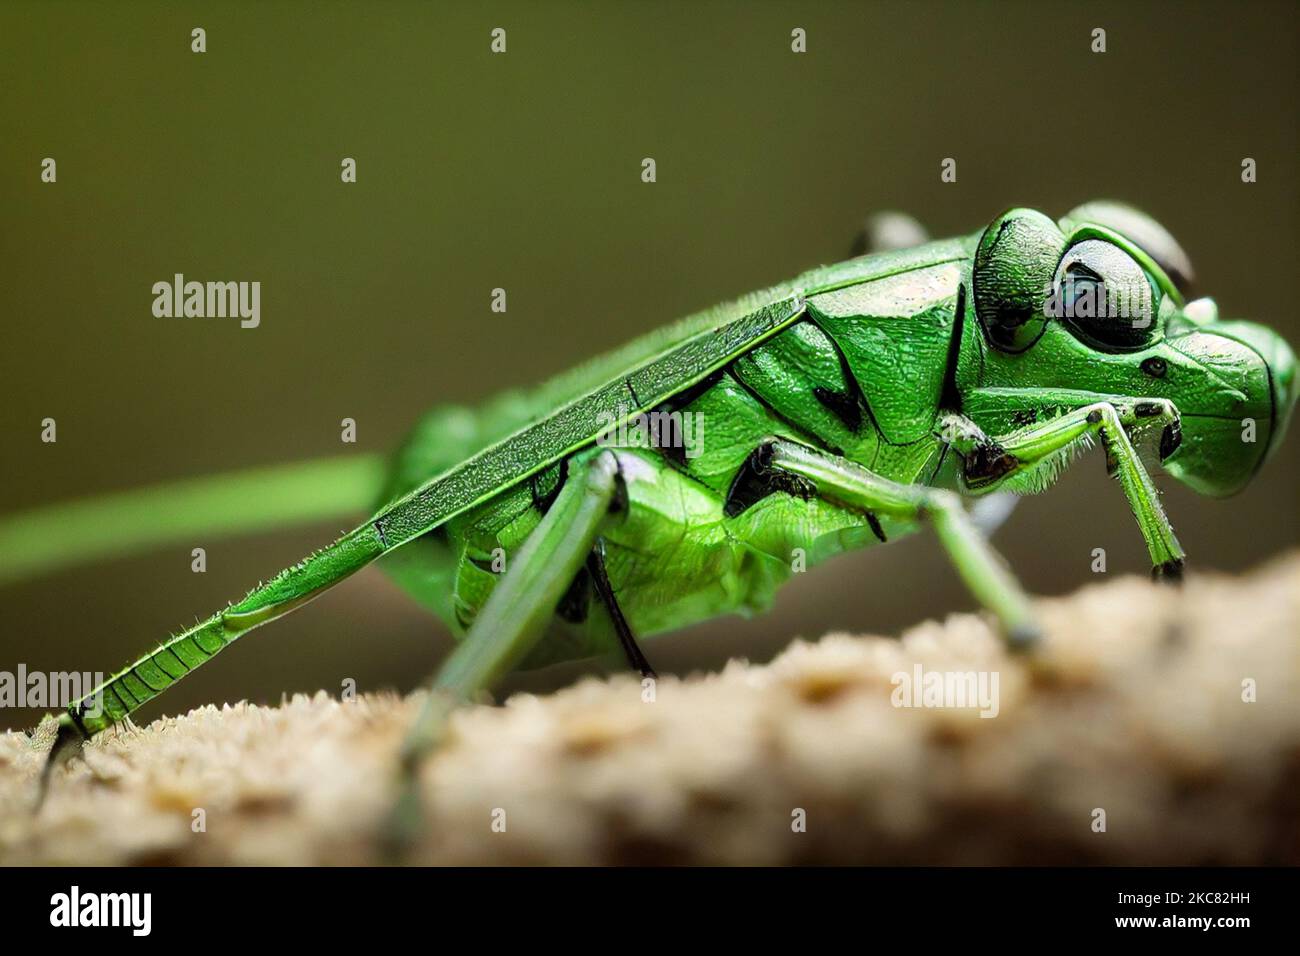 Insect illustration - representative of a grasshopper Stock Photo